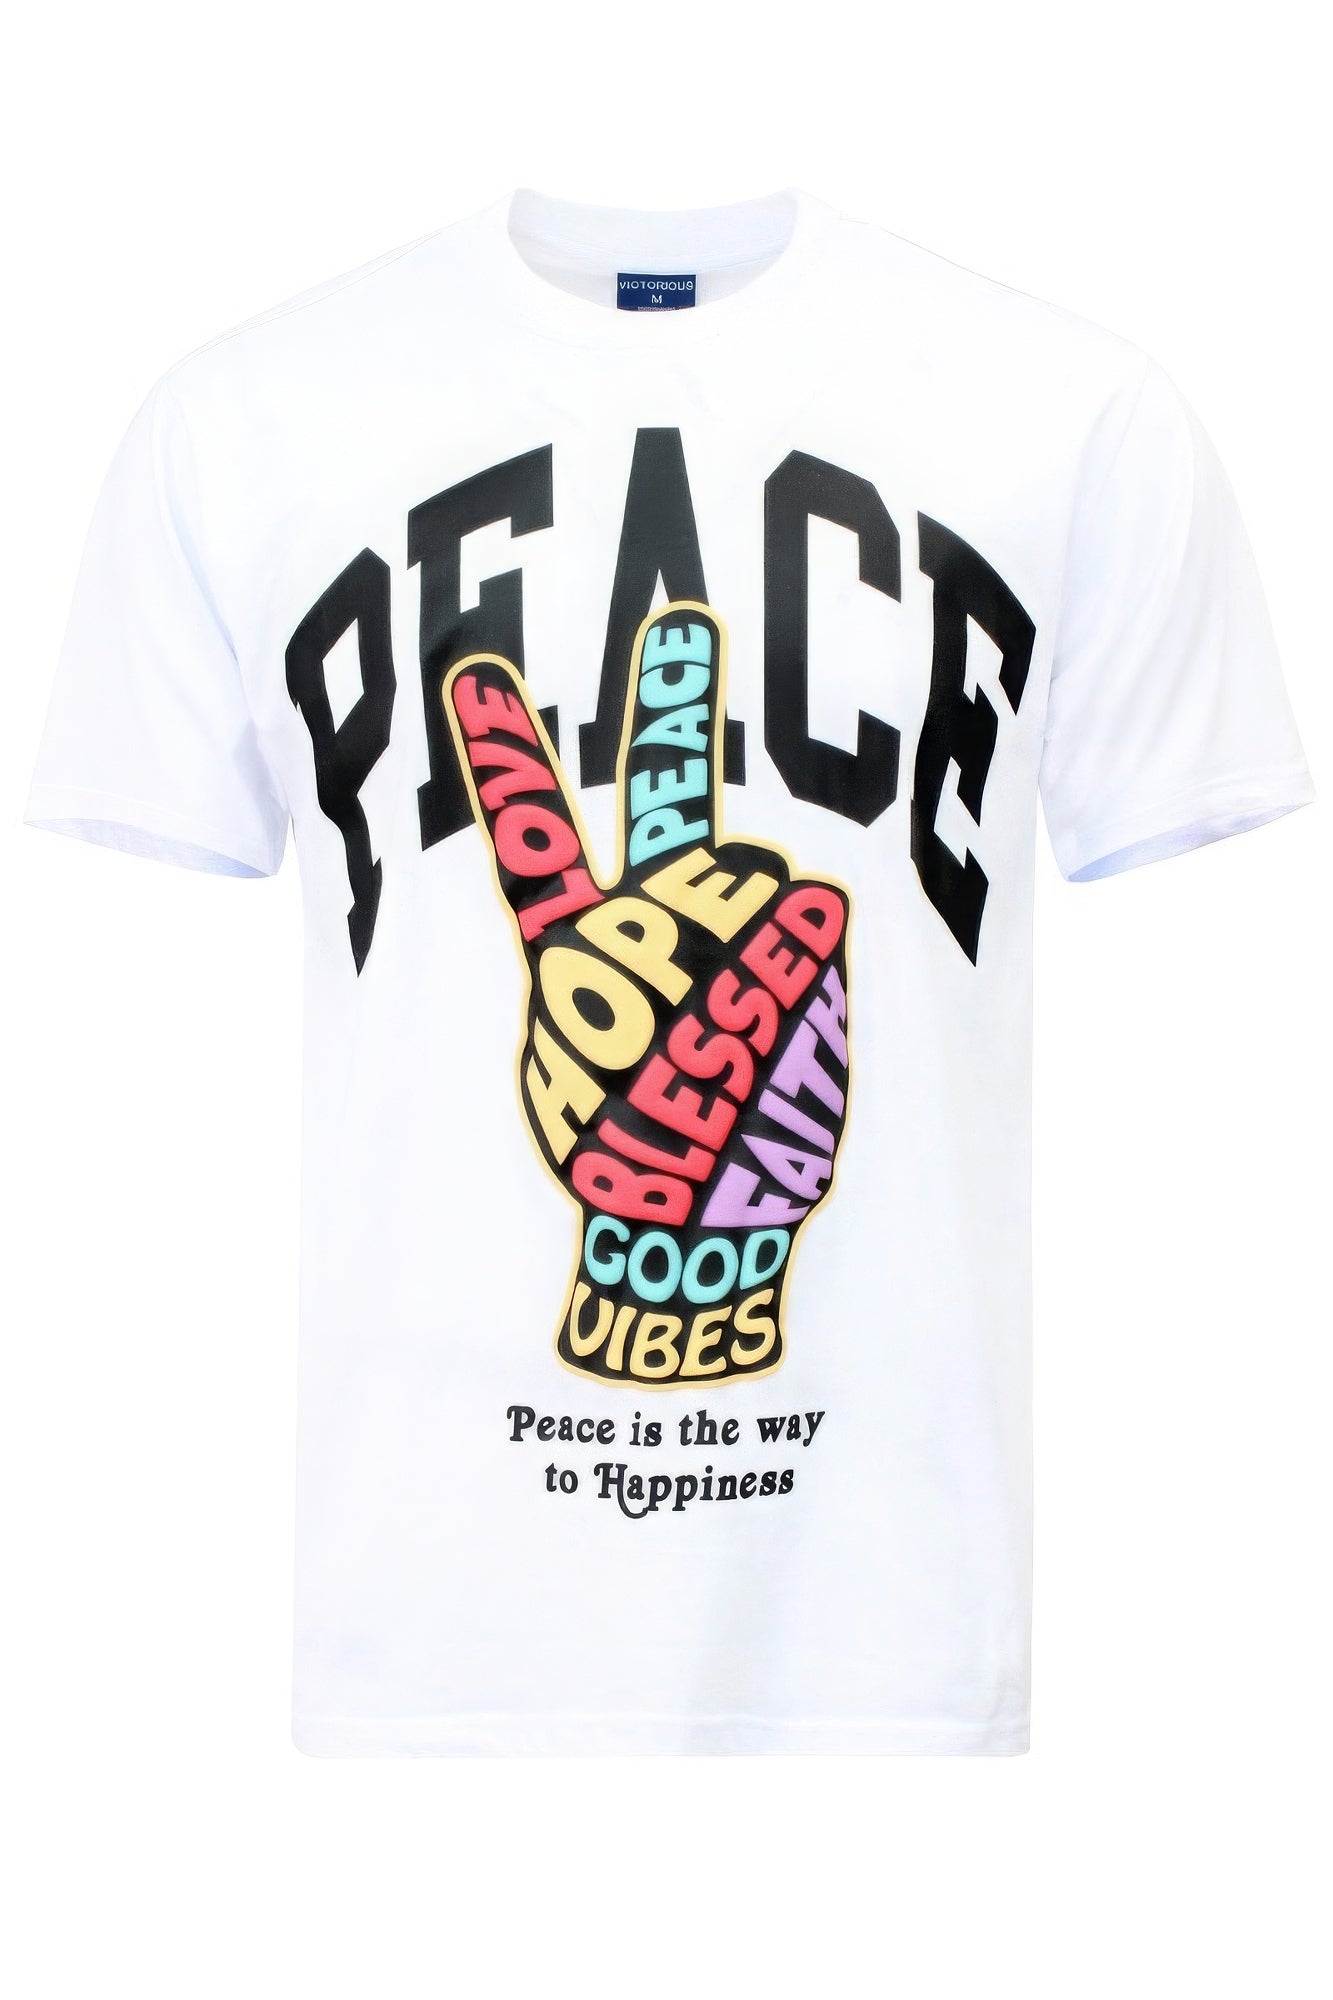 Peace Hand Sign T-shirts - Tigbuls Variety Fashion